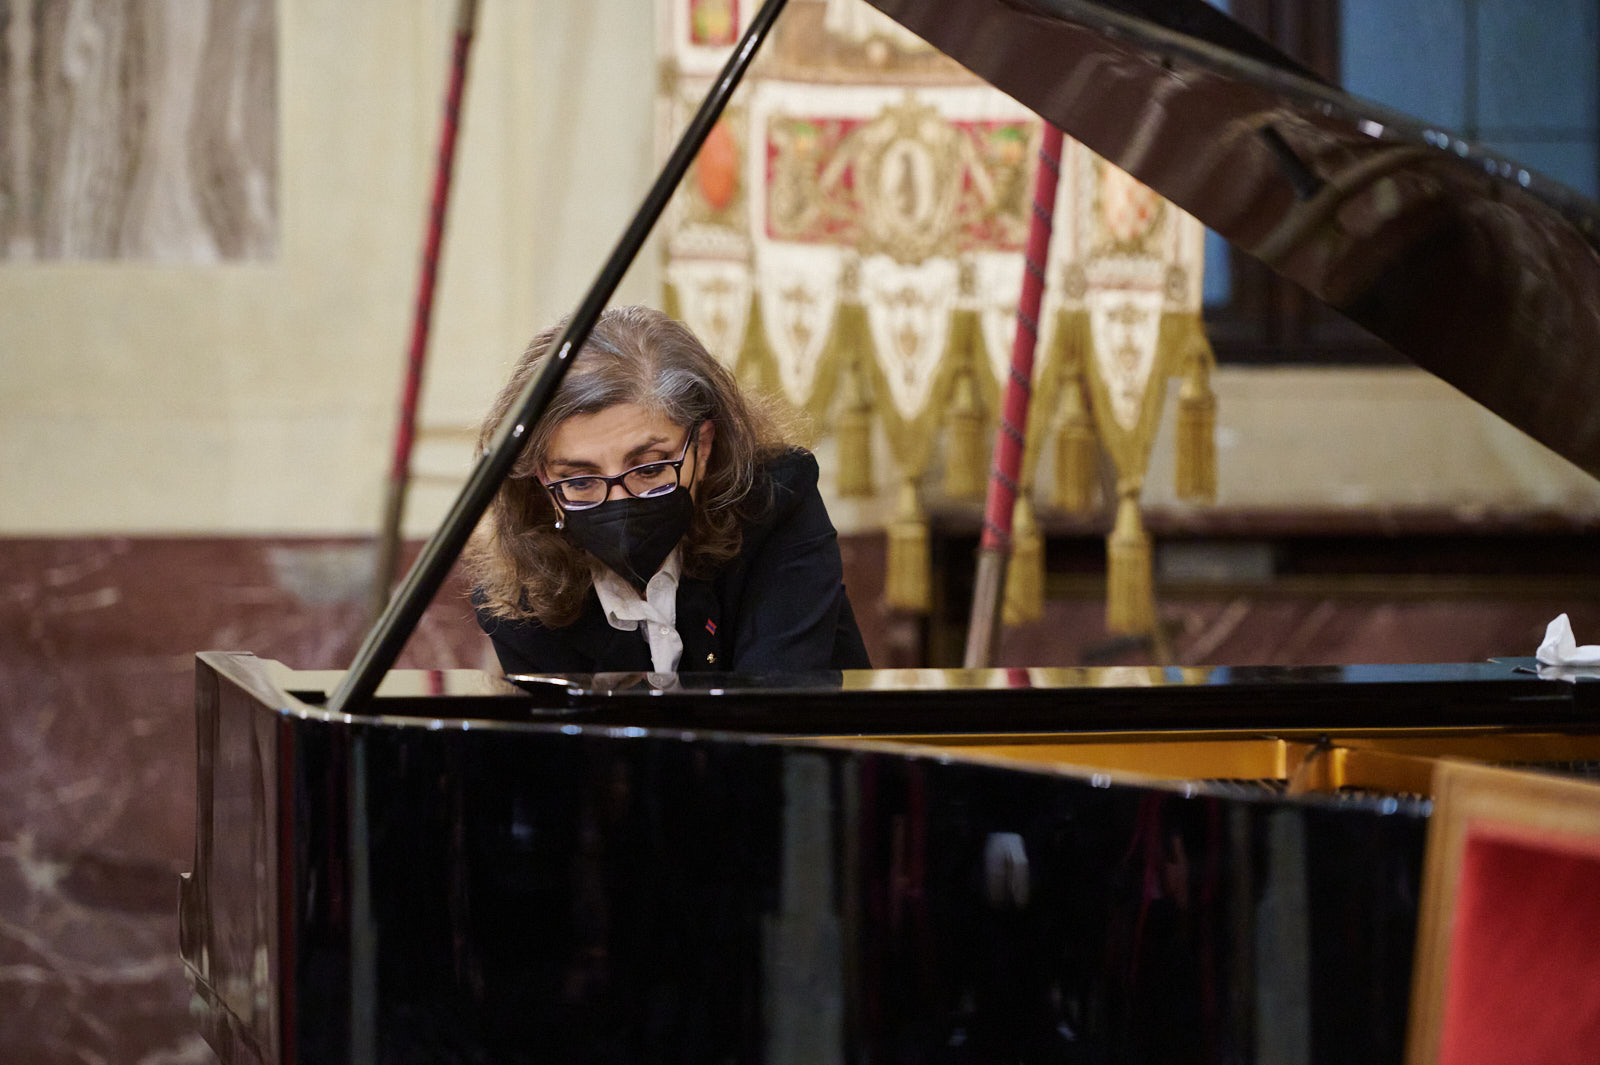 the pianist Ani Martirosyan